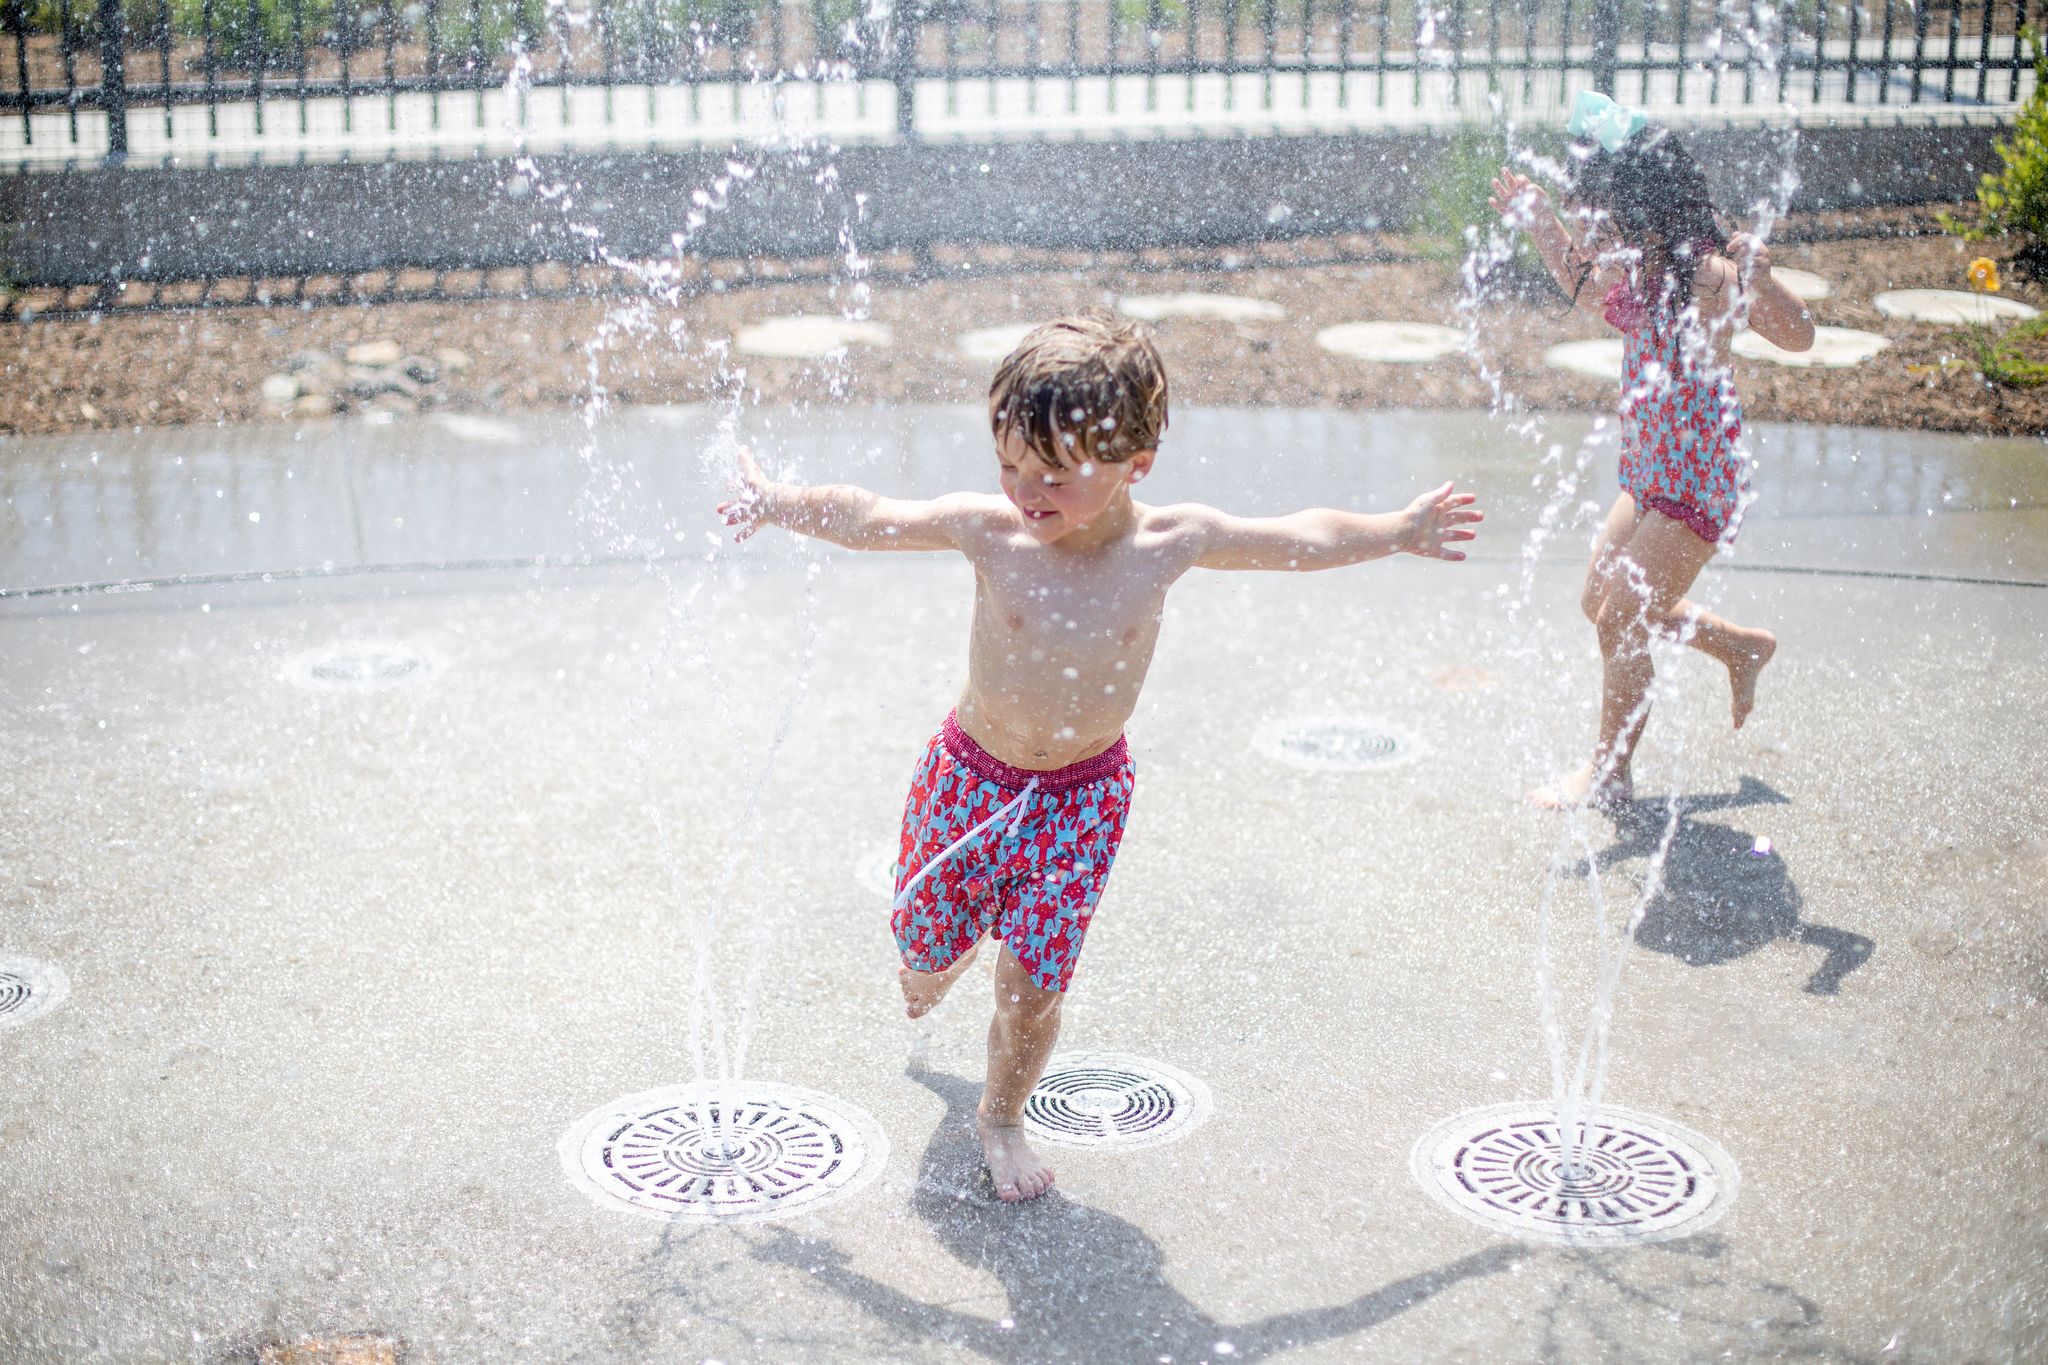 A little boy runs through a splash pad sprinkler in High Point, NC at Blessing Park.